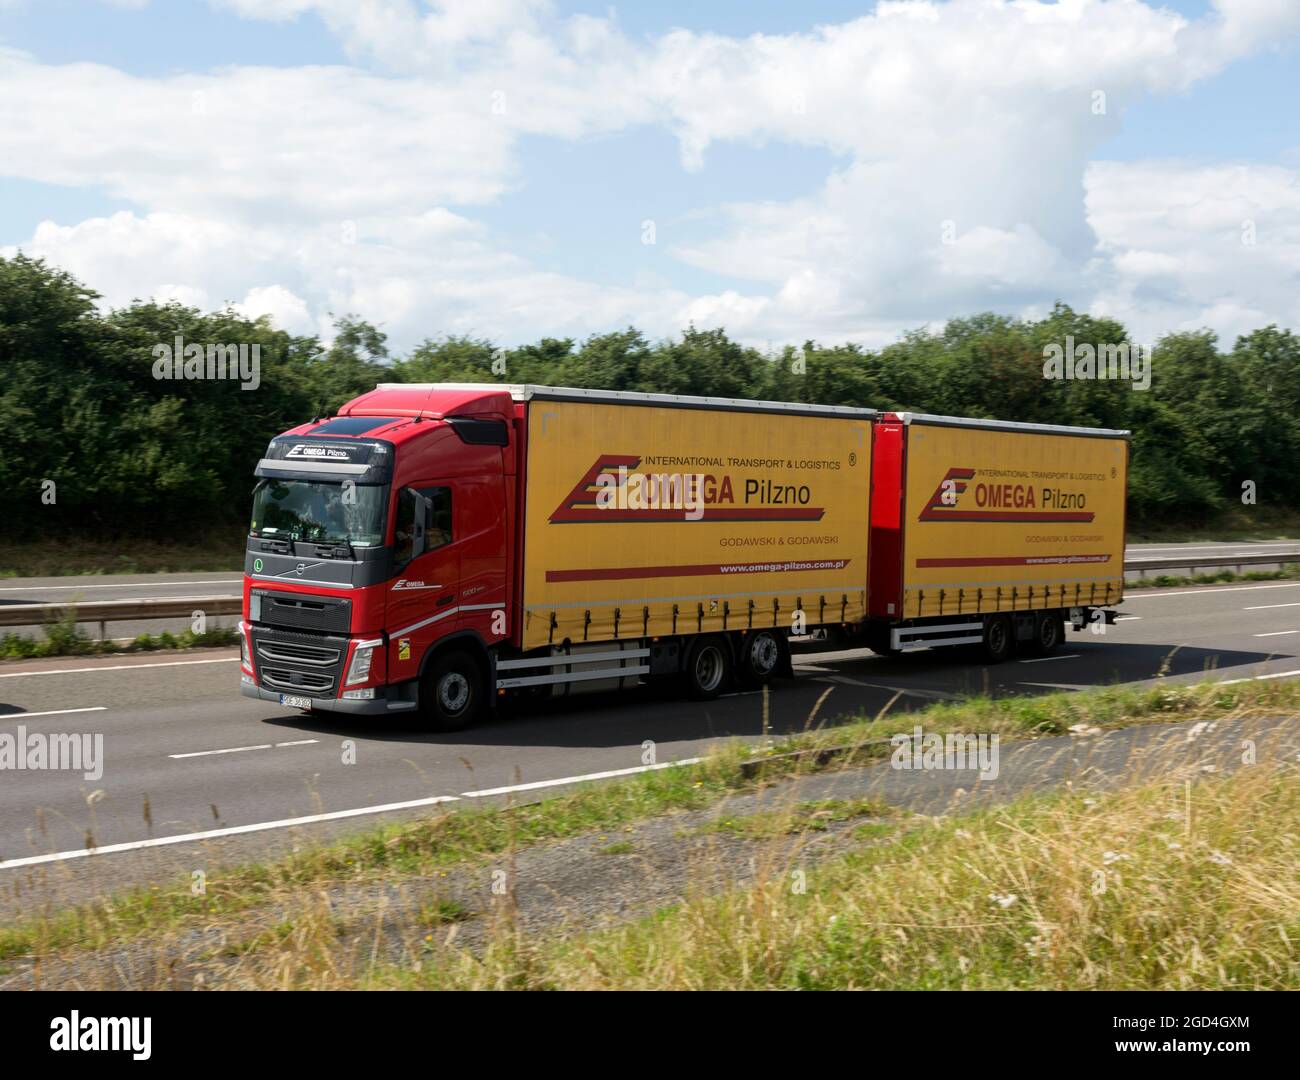 An Omega Pilzno lorry on the M40 motorway, Warwickshire, England, UK Stock Photo